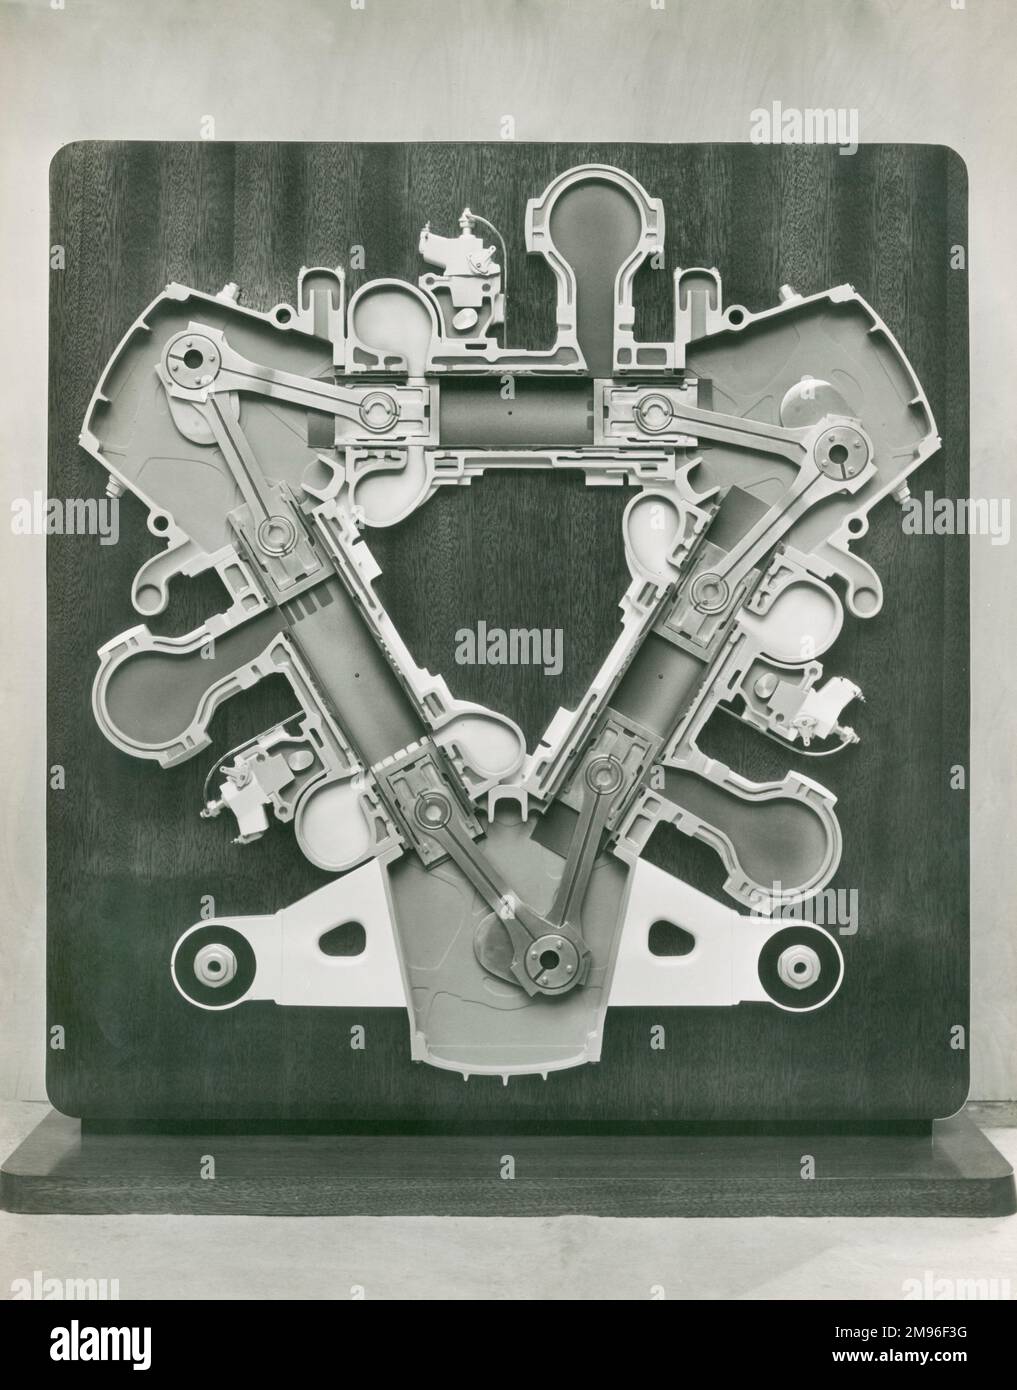 Napier Deltic engine, cross section Stock Photo